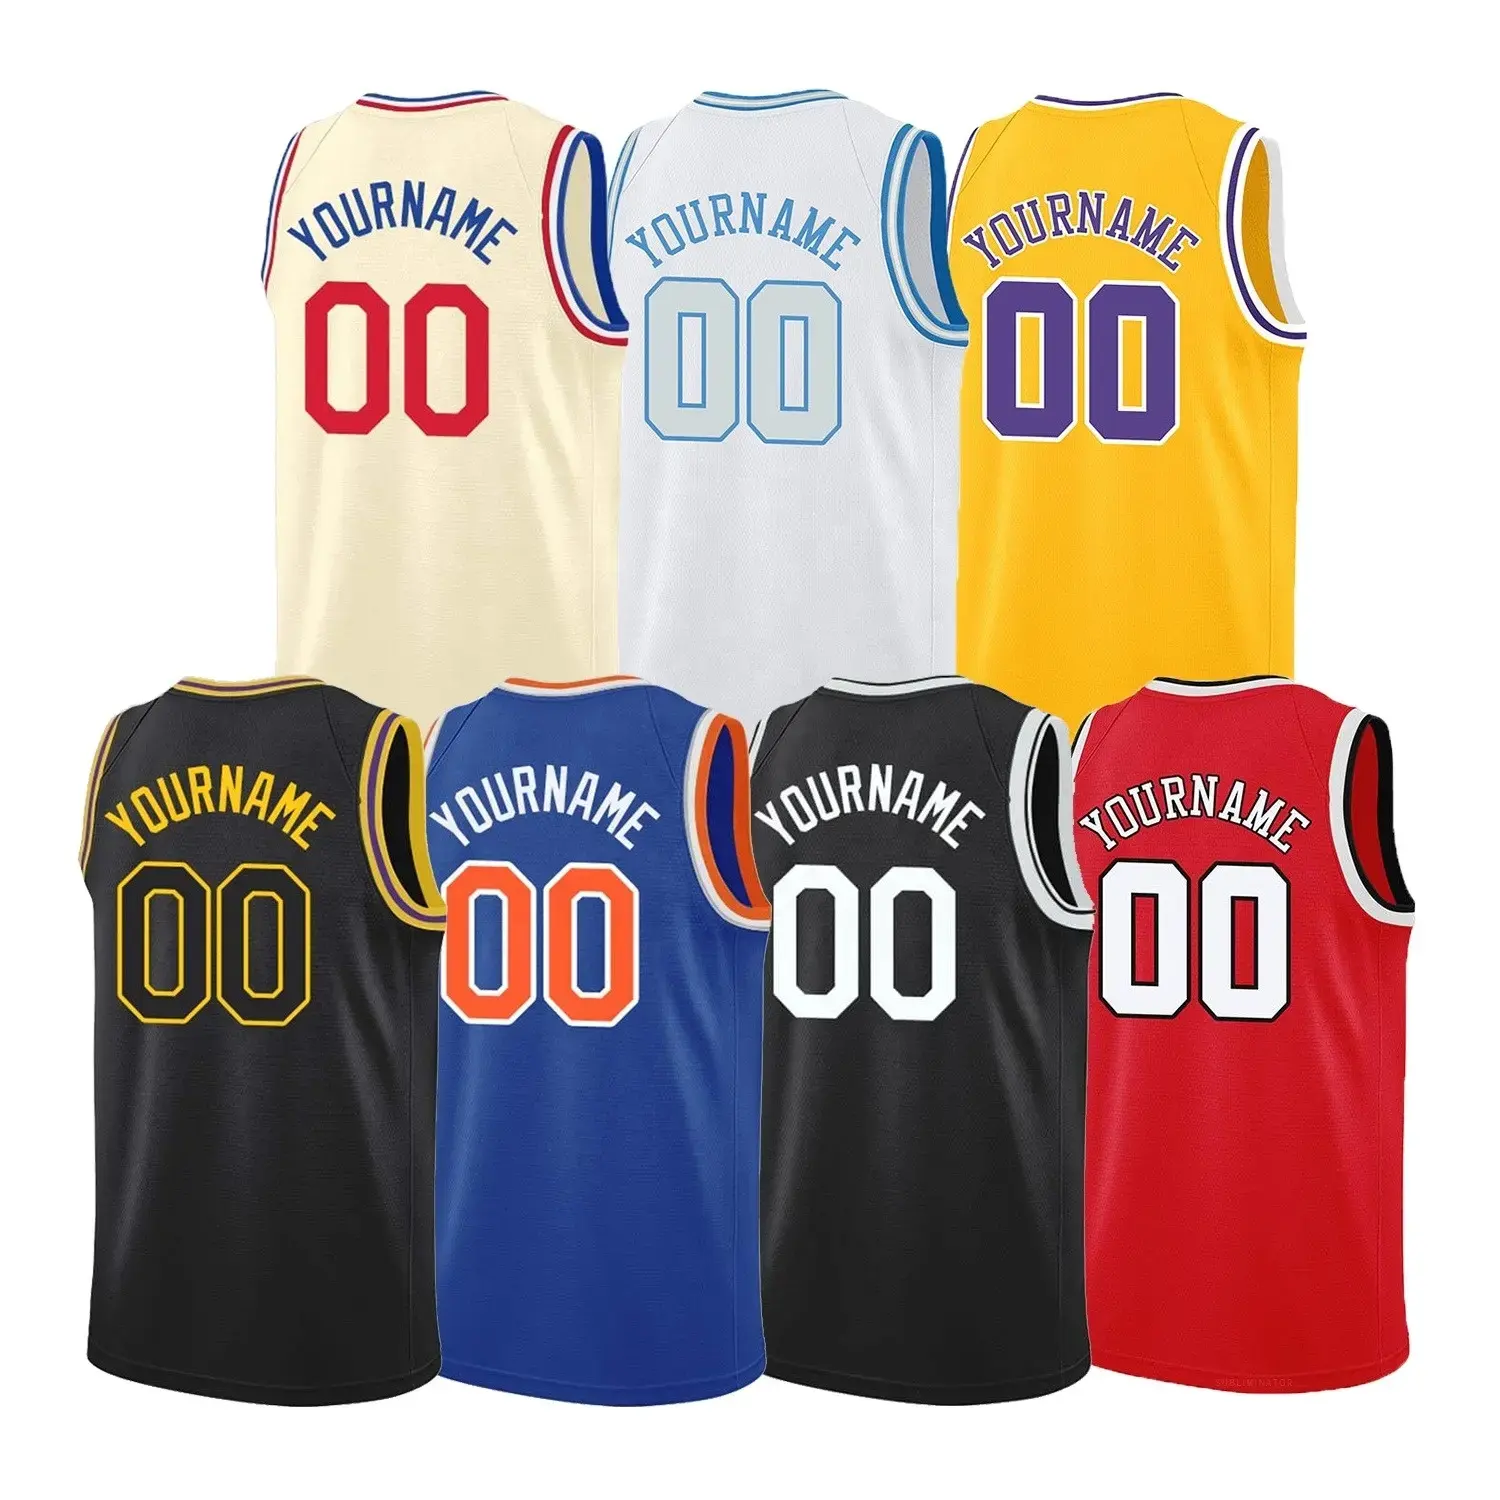 Wholesale blank basketball jersey shirt cheap custom design pink and black men's plain basketball jerseys uniforms